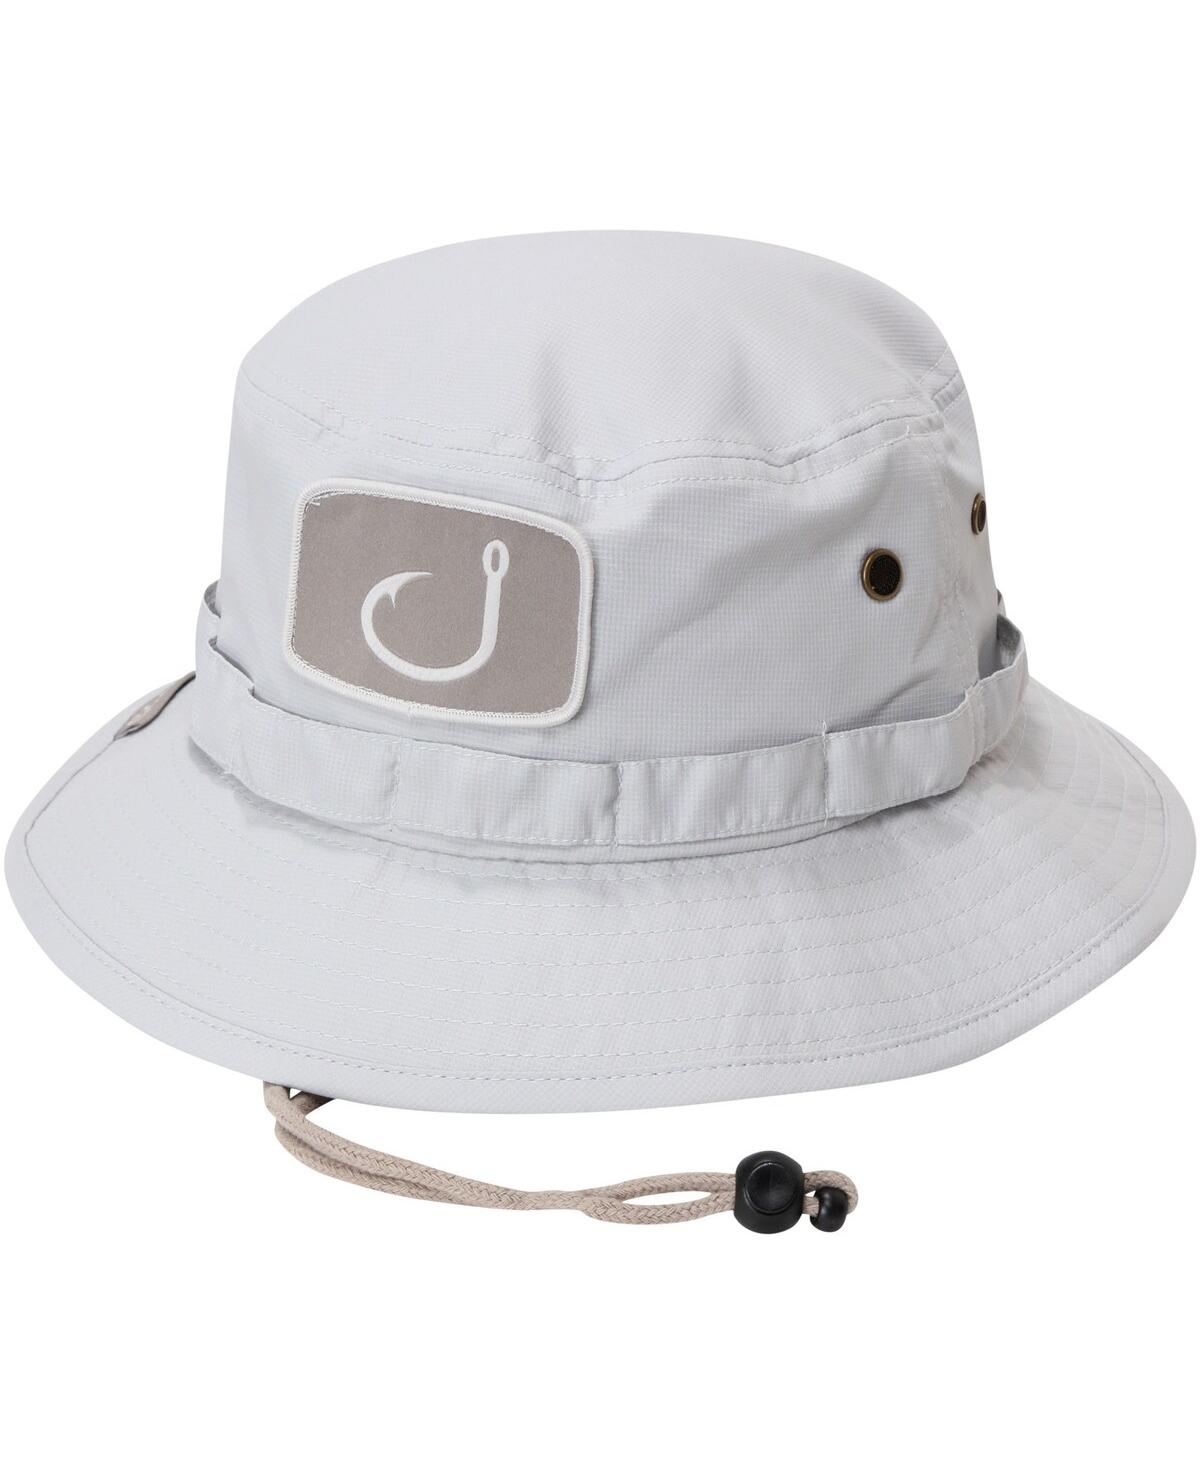 Avid Men's  White Khaki  Baja Boonie Bucket Hat